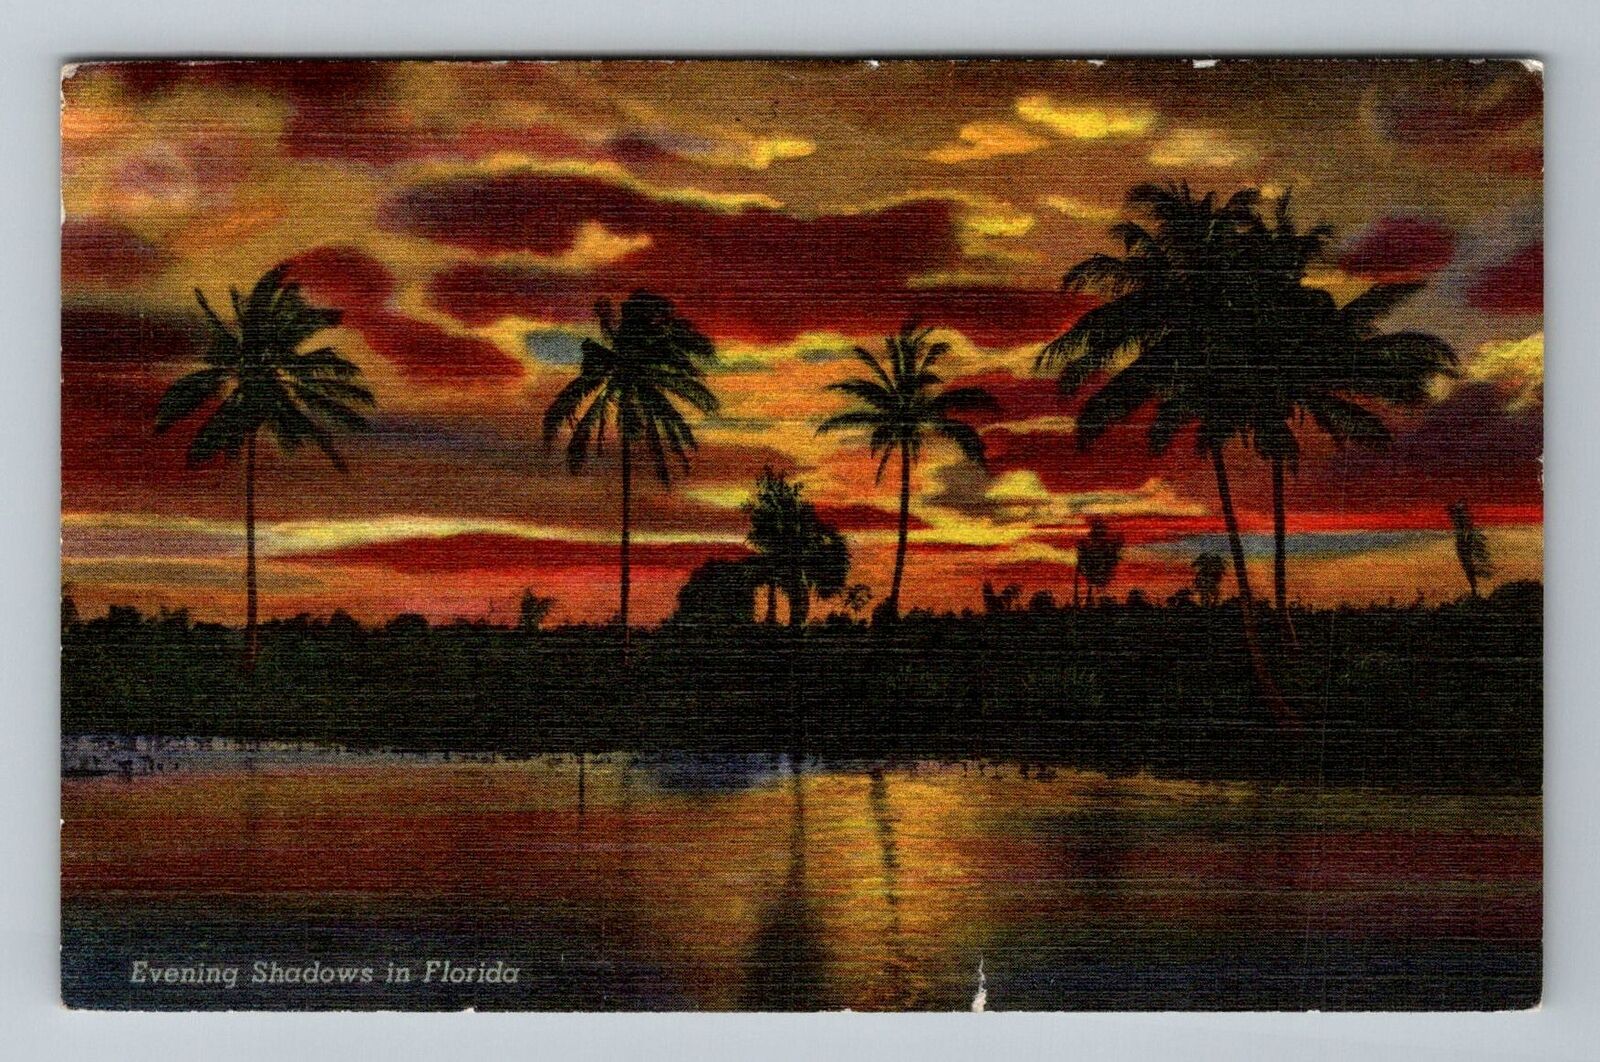 FL-Florida Colorful Evening Shadows Vintage c1951 Souvenir Postcard